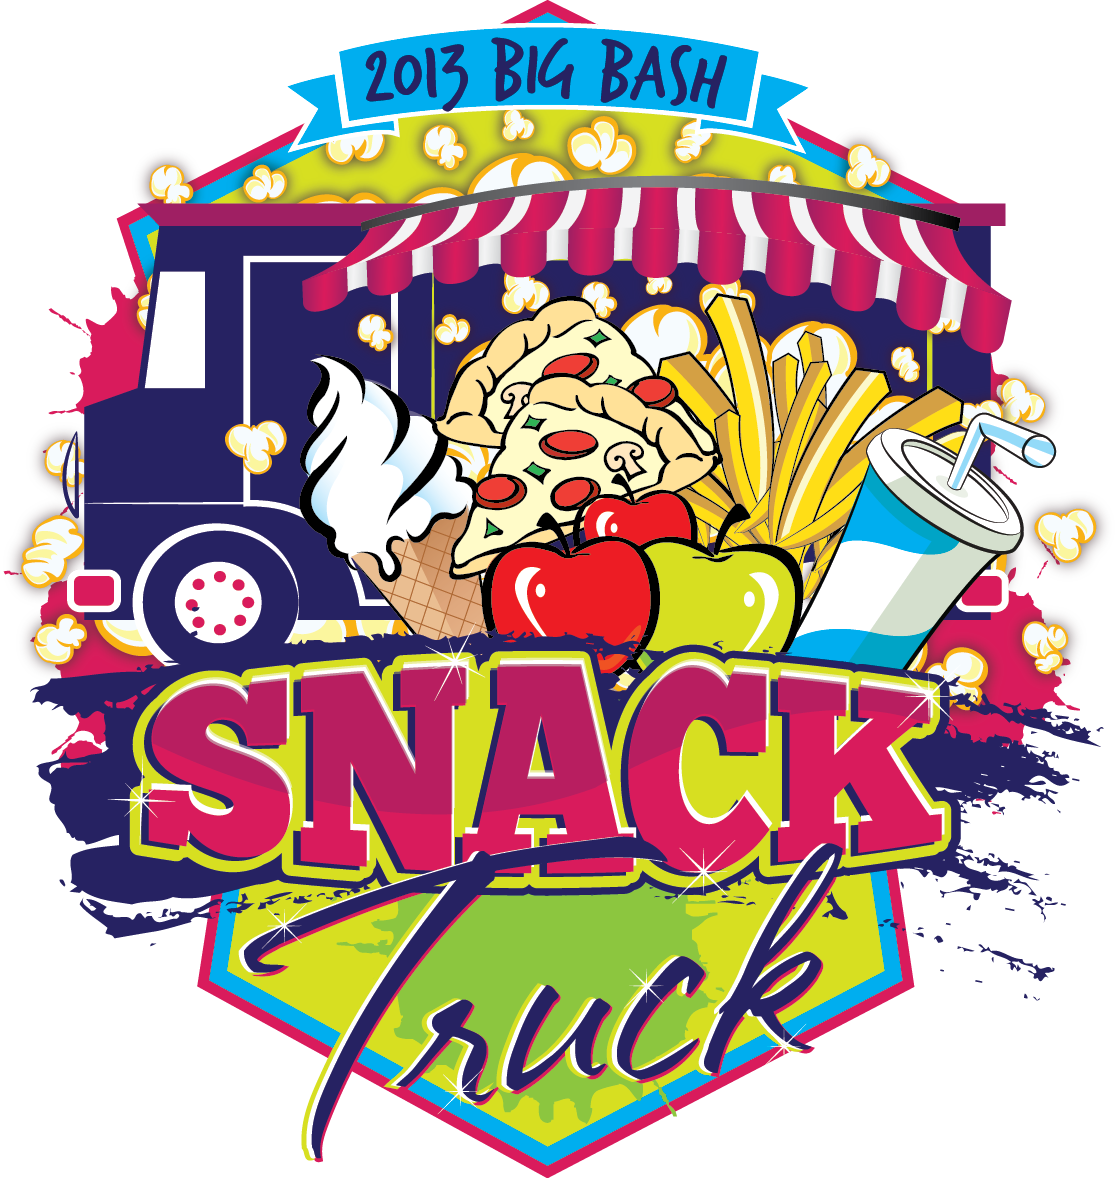 Big Bash  kings dominion  amusement park  Junk food  Snacks  Illustration  logo  bright colors  fun  ice cream  KD  sorority  fraternity